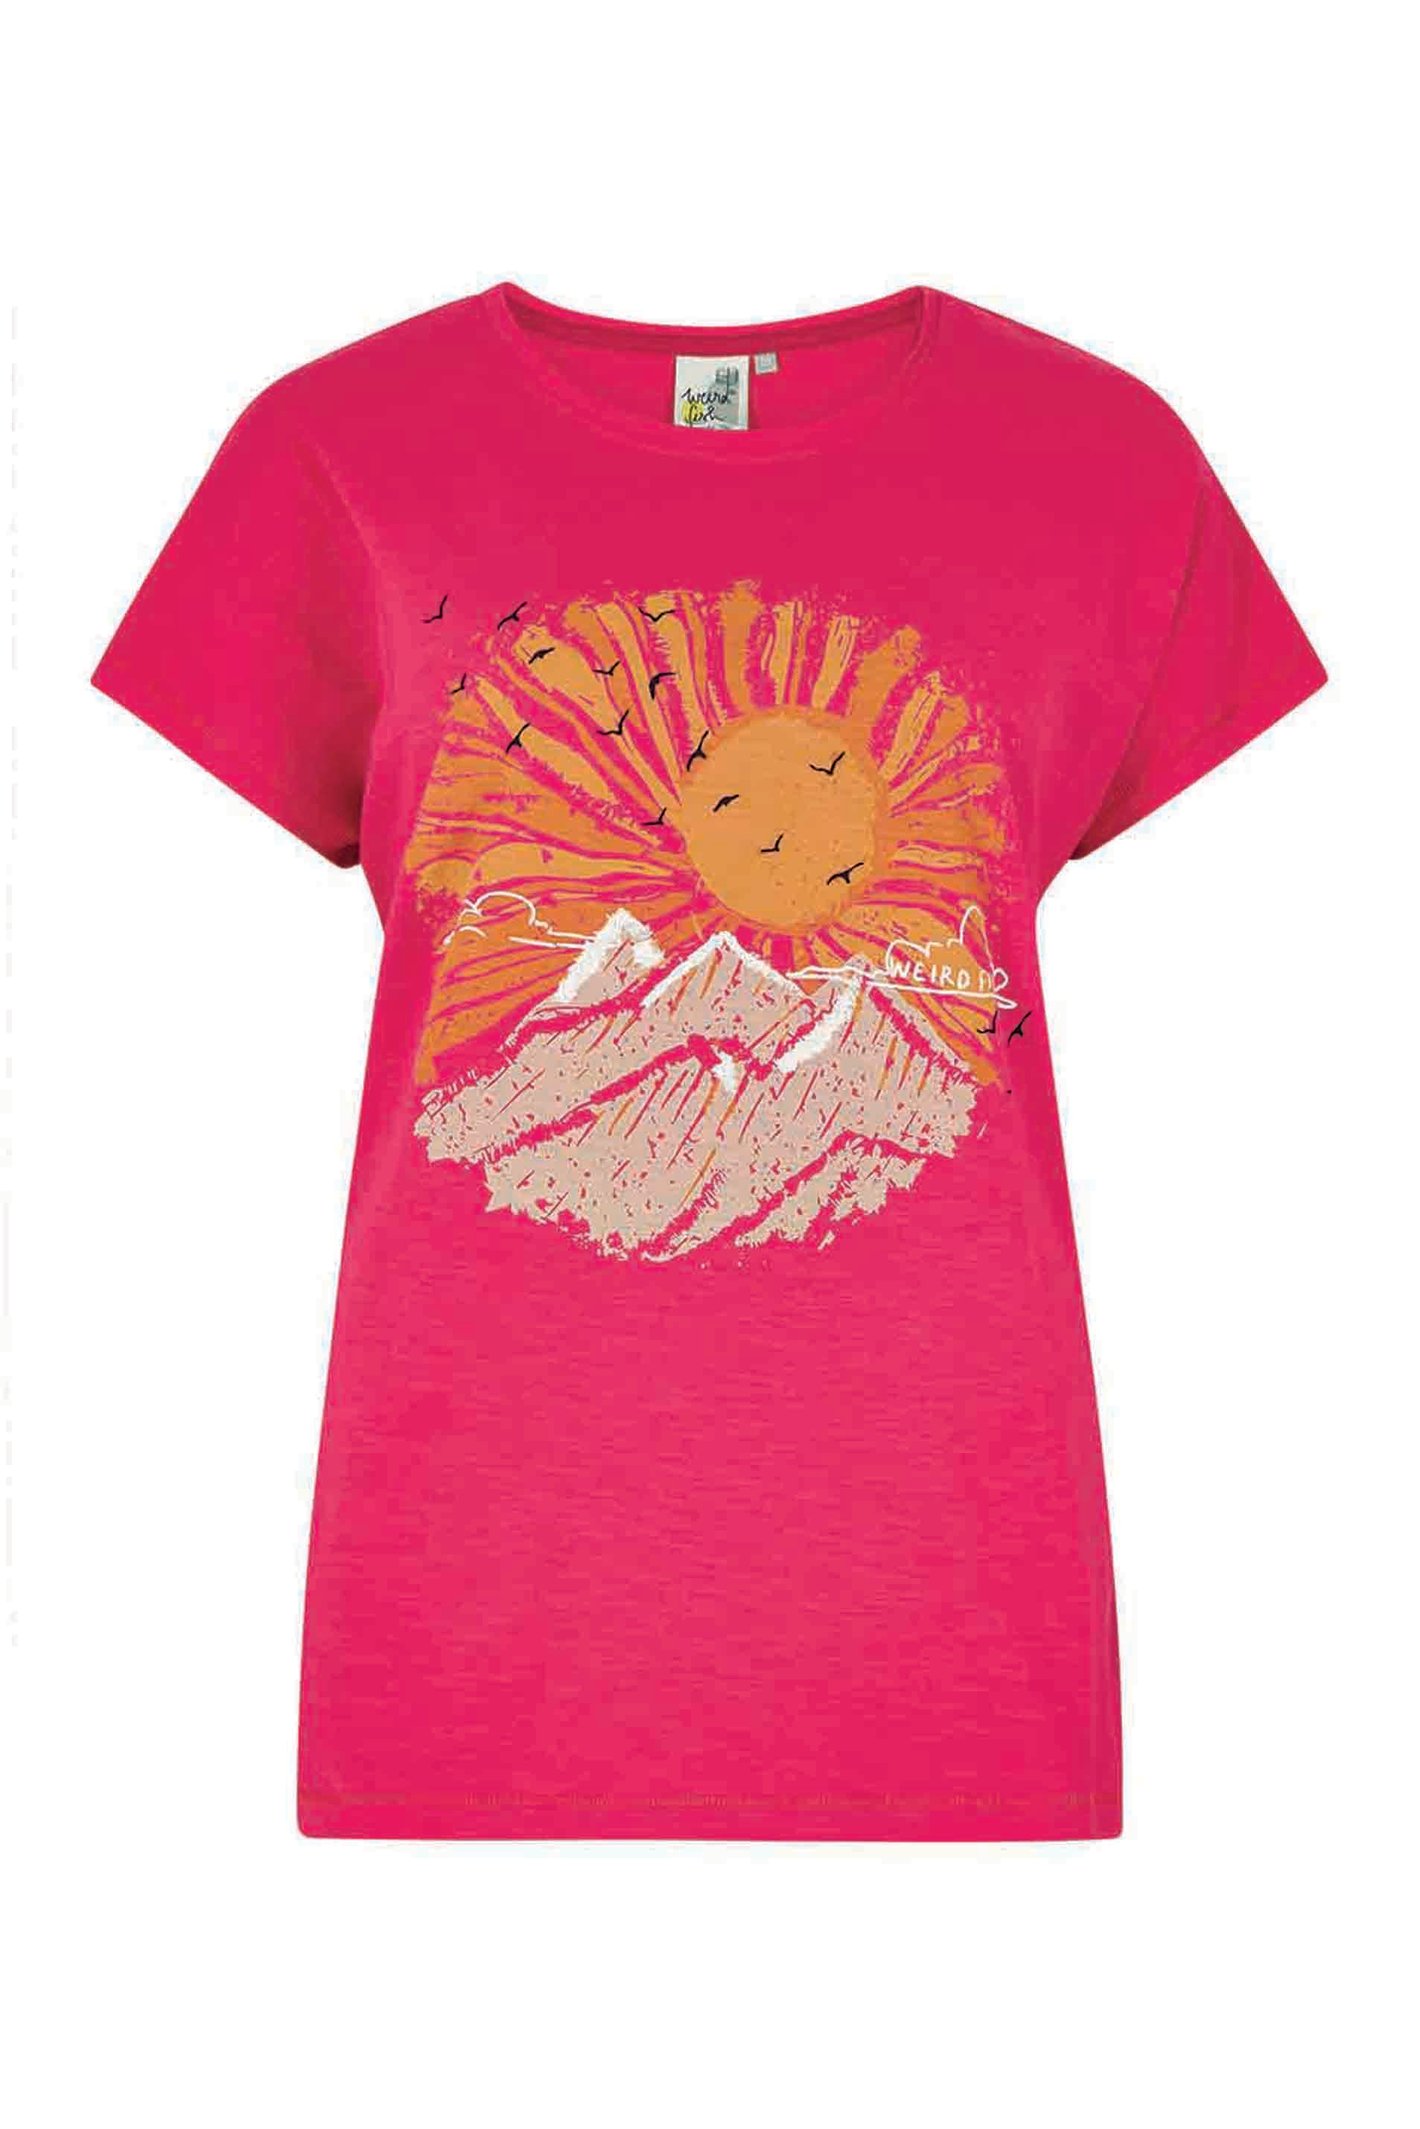 Weird Fish Sundown Organic Cotton Slub T-Shirt  Hot Pink Size 10